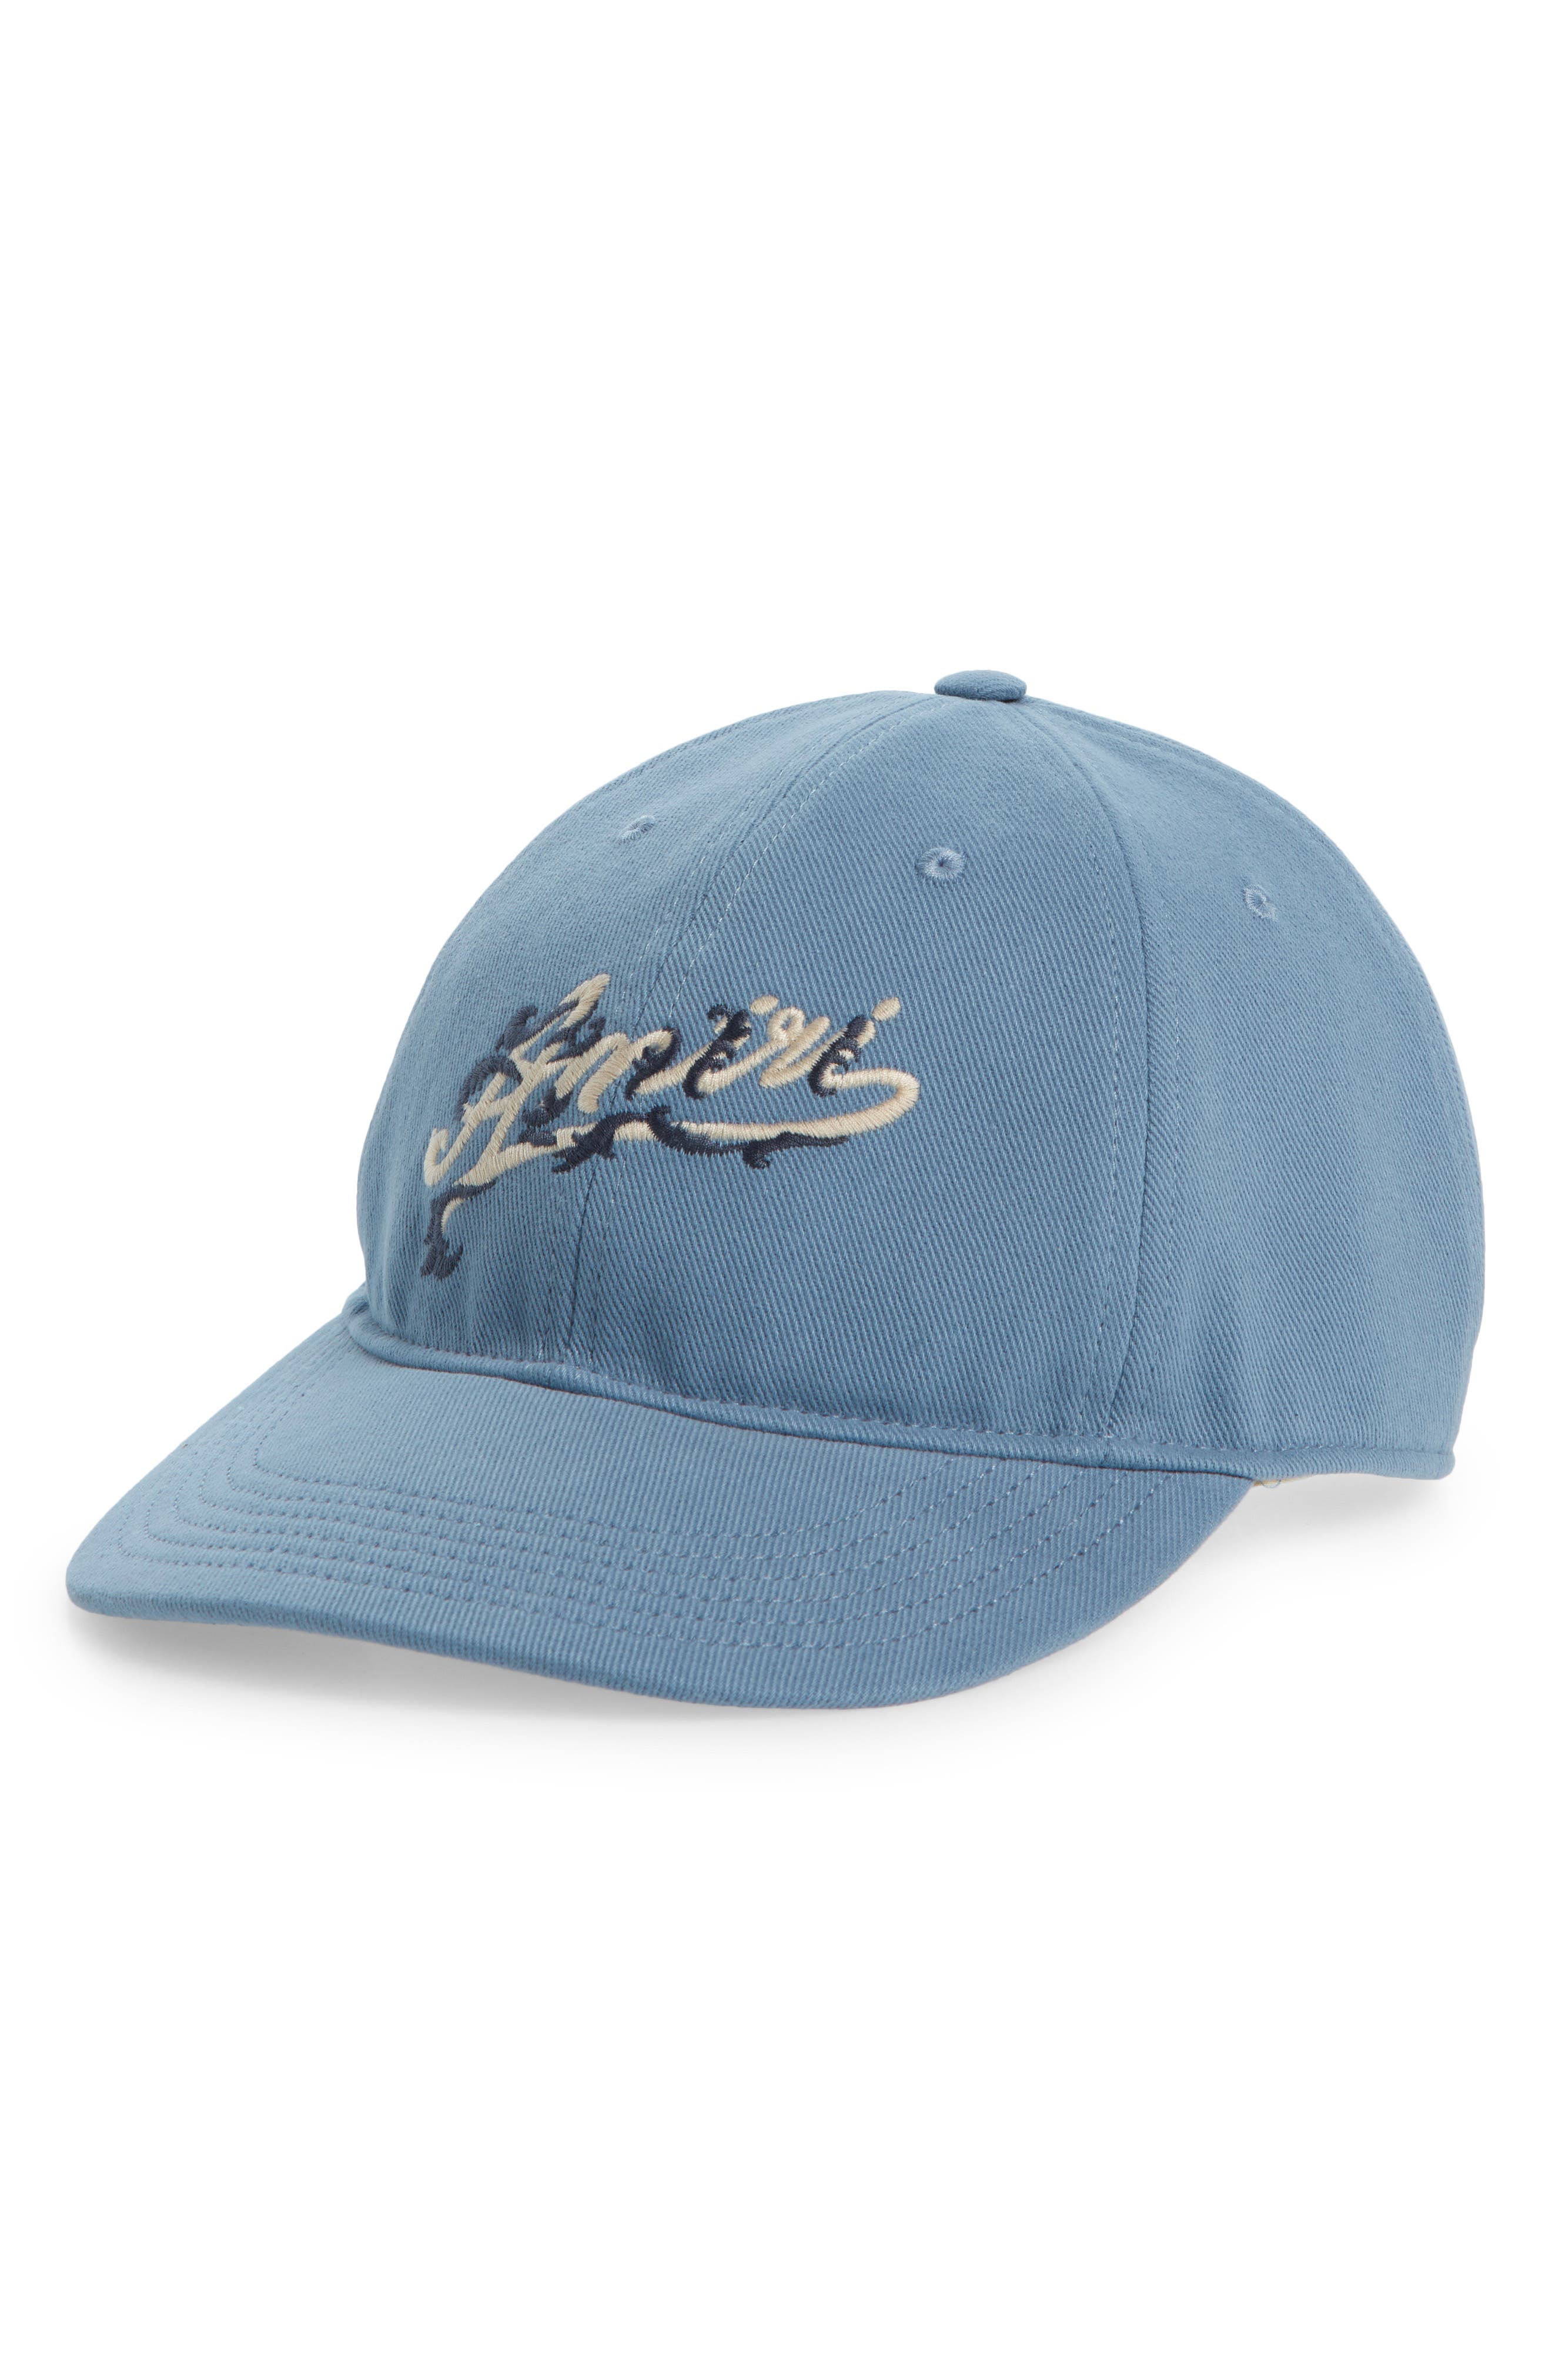 BOSS Kidswear logo-print reversible baseball cap - Blue